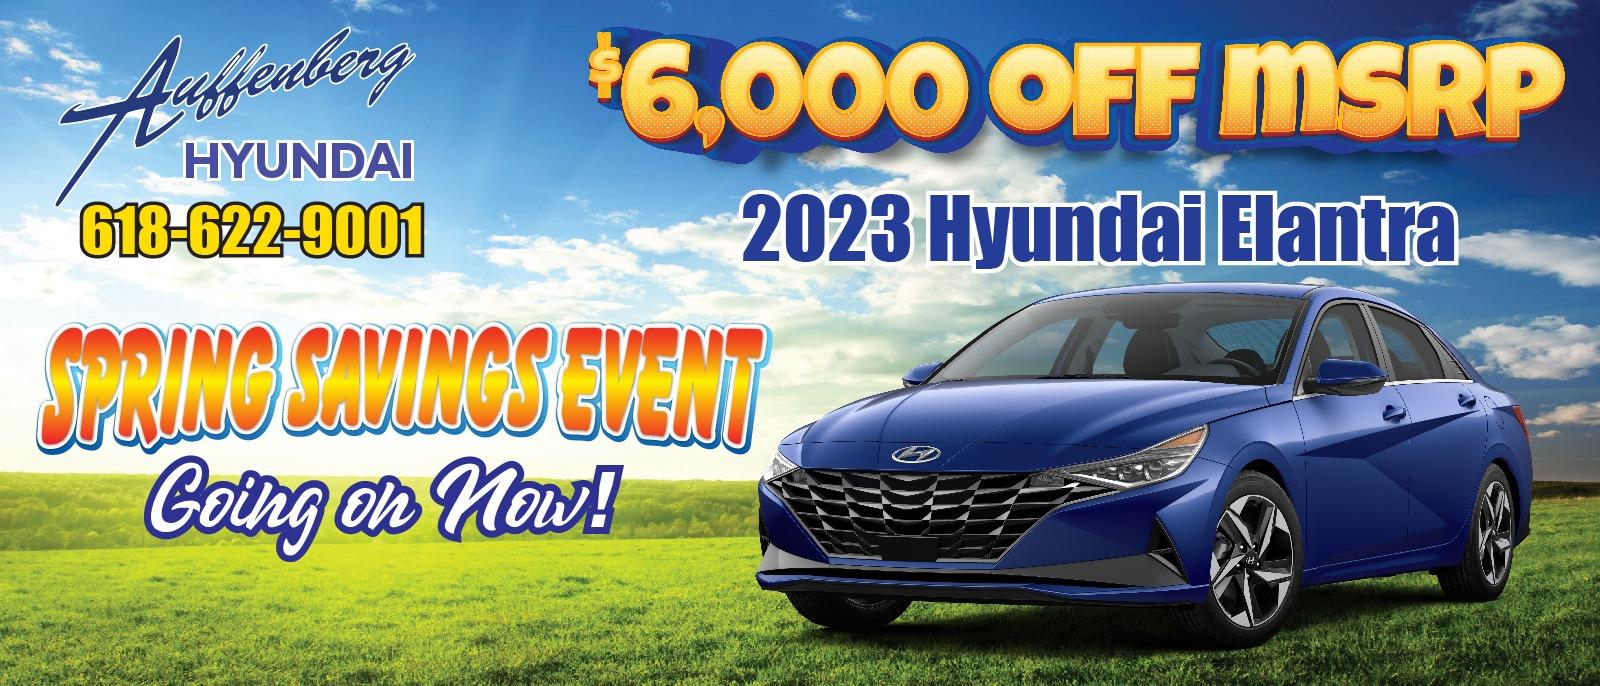 2023 Hyundai Elantra
$6,000 off MSRP